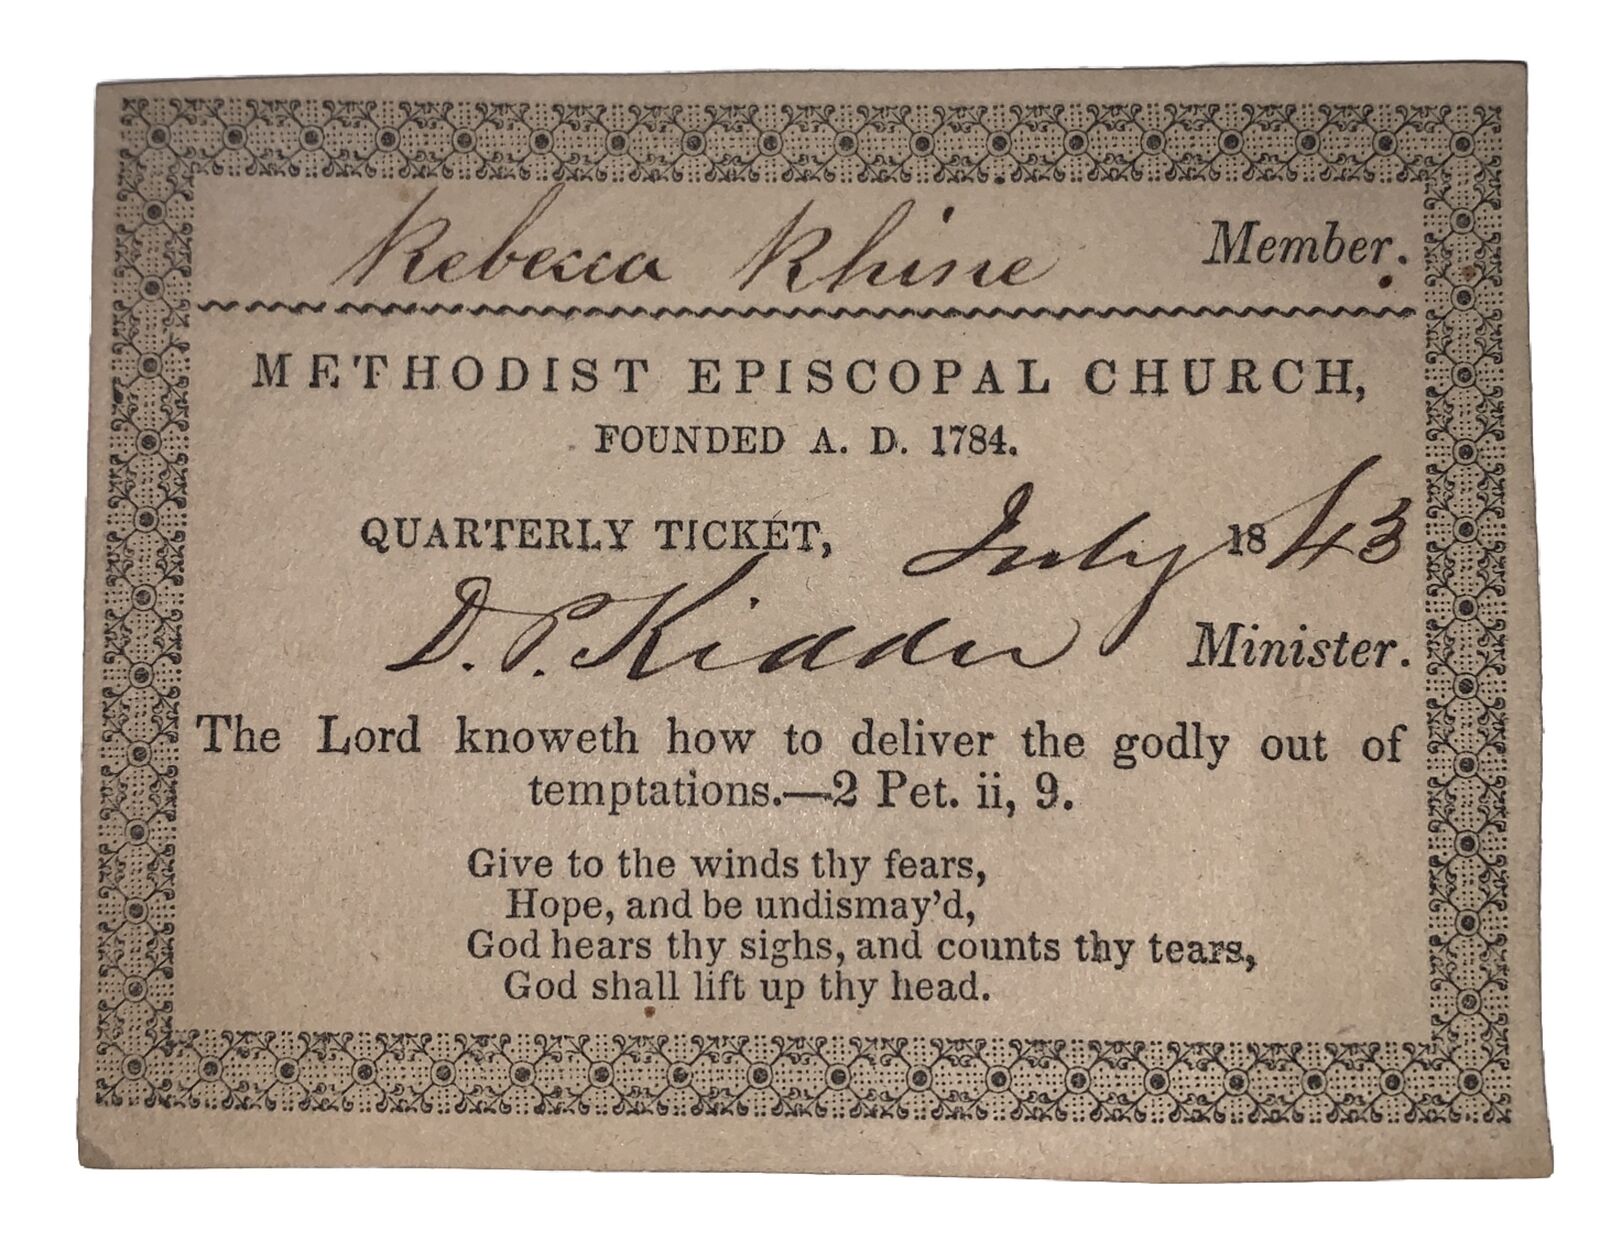 METHODIST EPISCOPAL CHURCH QUARTERLY TICKET 1843, SIGNED by DANIEL PARISH KIDDER